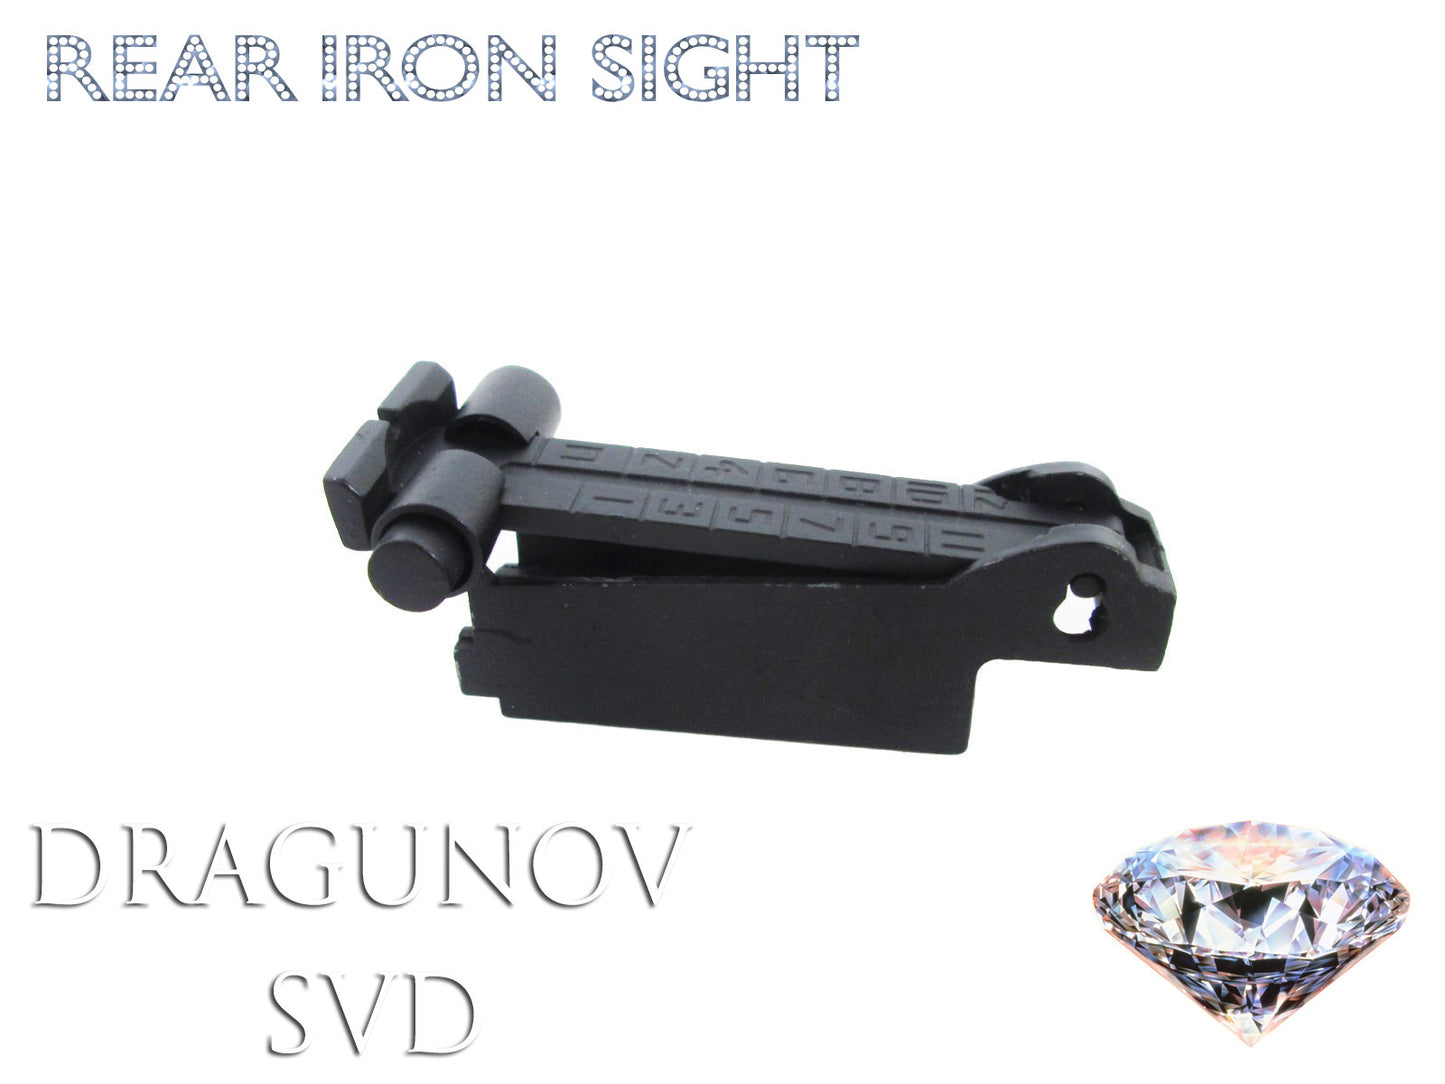 Dragunov SVD Rear Sight Assembly Kit - Airsoft